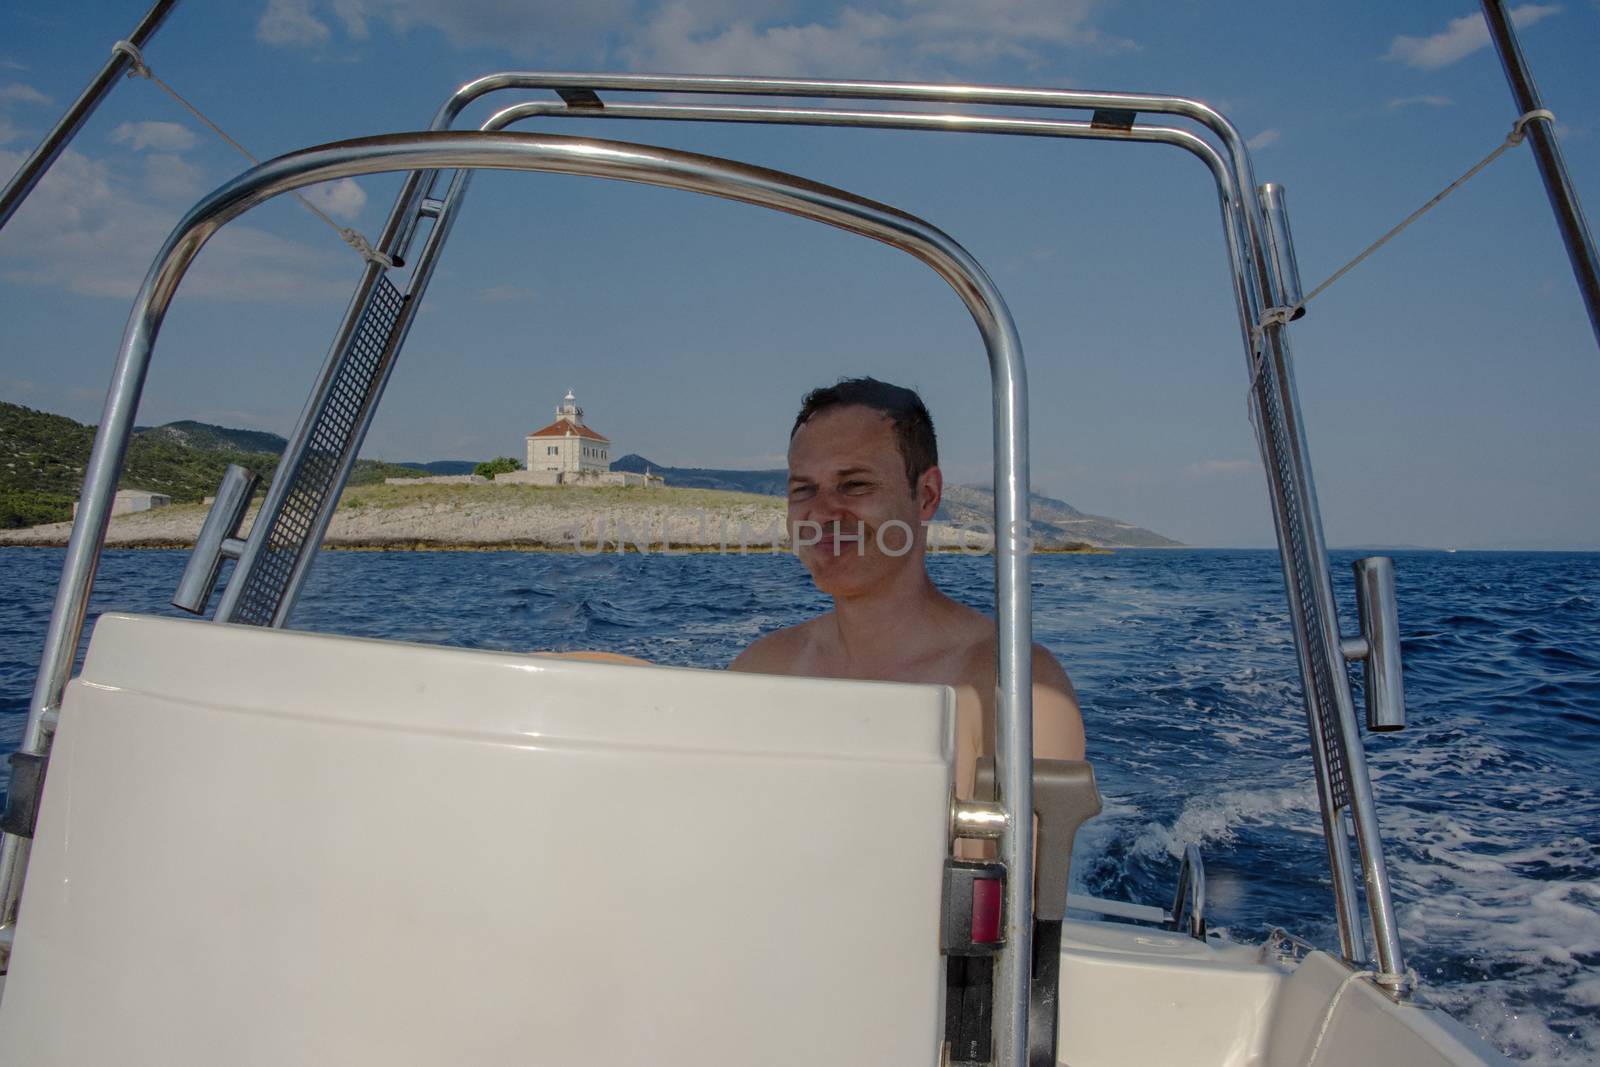 Croatia, Hvar - June 2018: Caucasian man, mid 40's drives a small boat on vacation